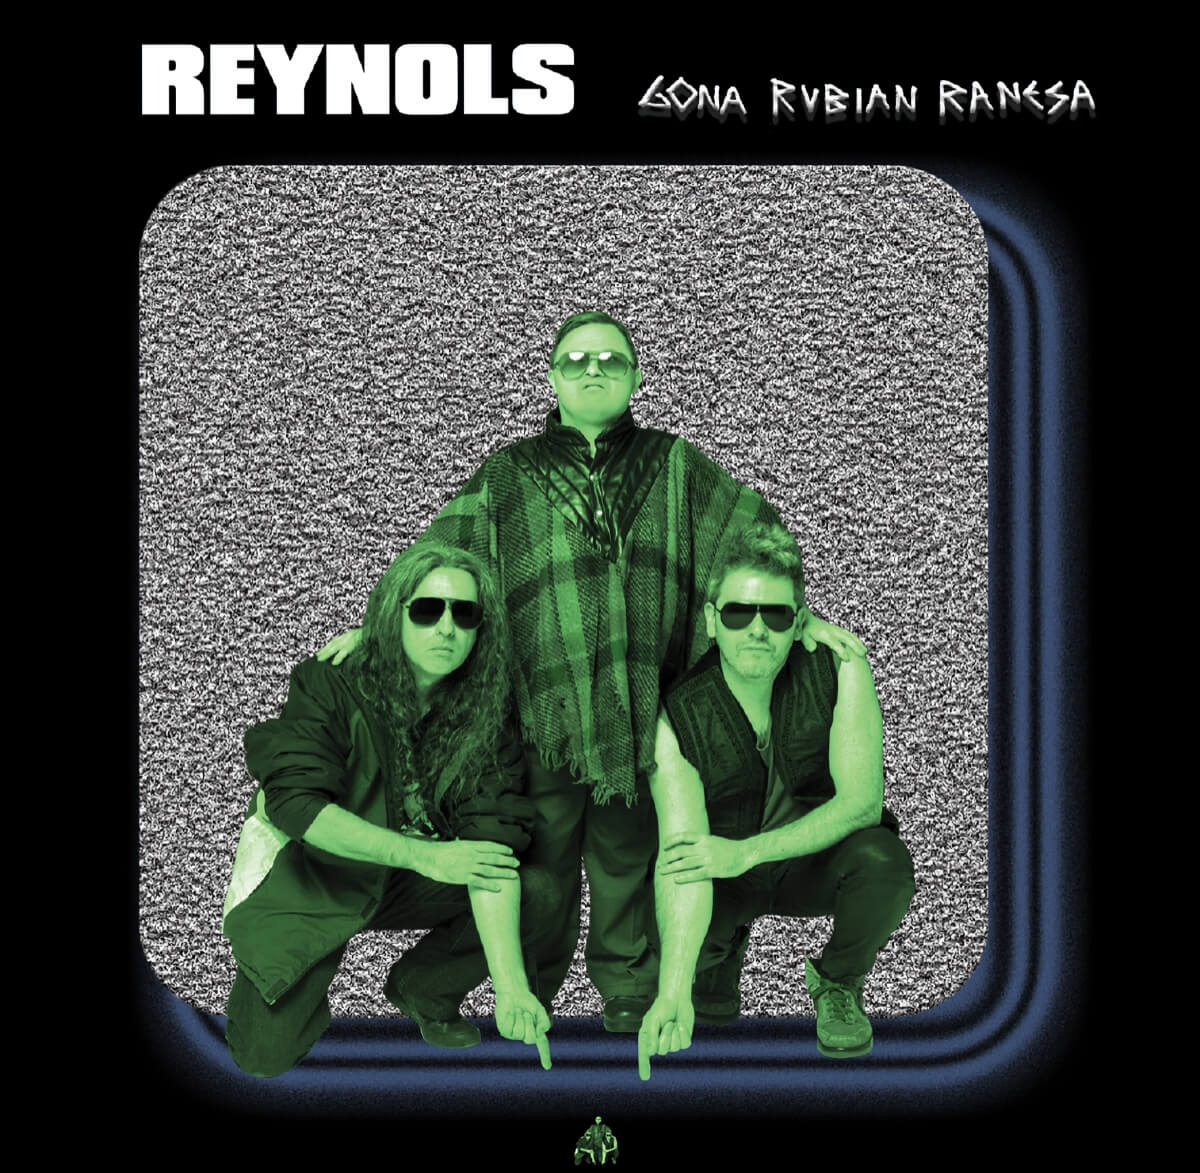 Reynol's Gona Rubian Ranesa album cover image printed on Alien Green translucent vinyl.